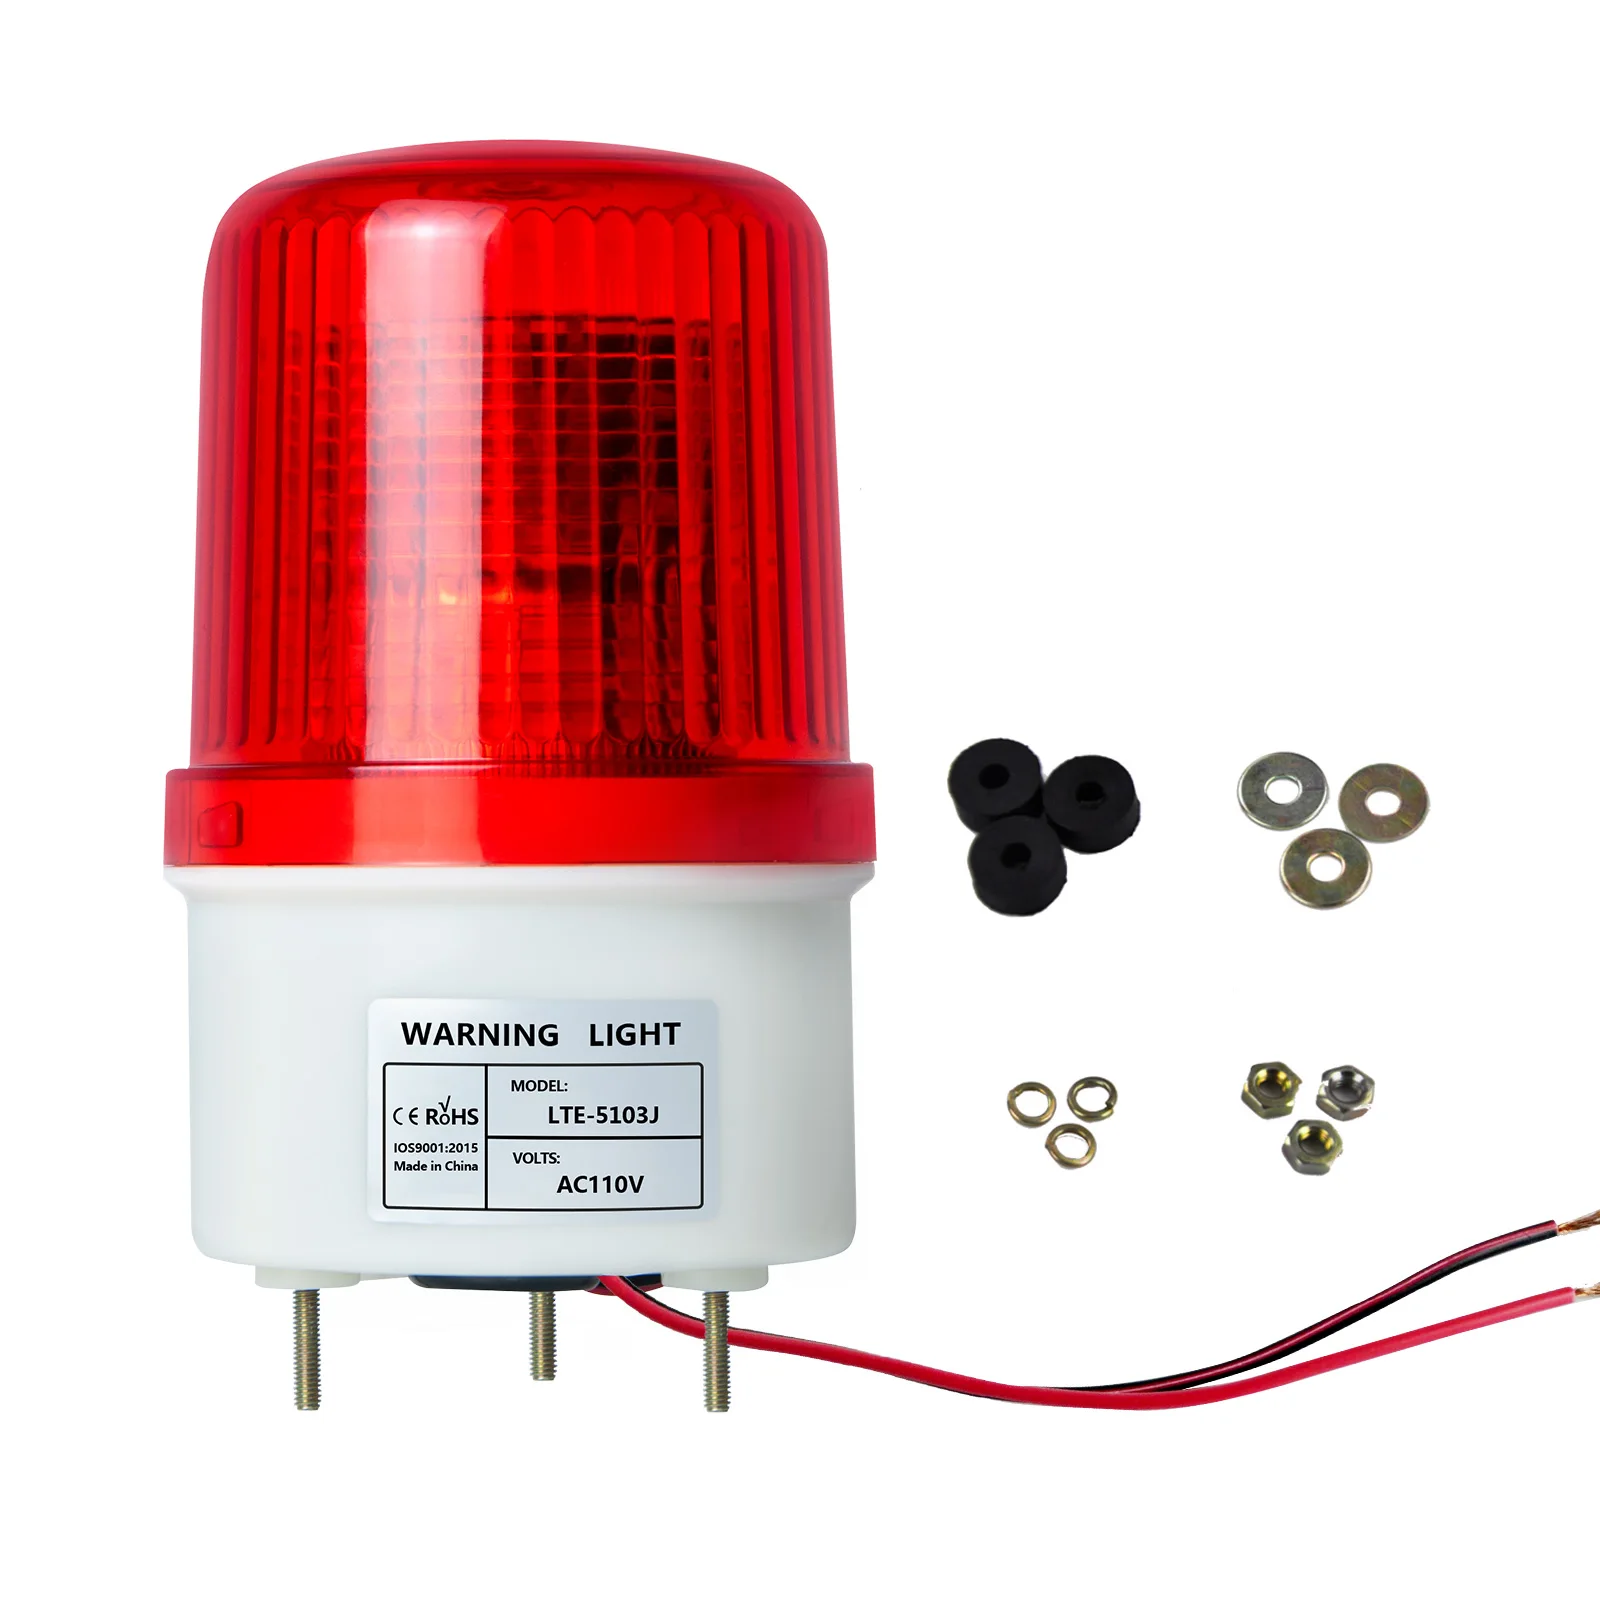 

Industrial High Quality Red Led Strobe Beacon Light 2Pcs Emergency Flashing warning Lamp with Buzzer 90dB Siren Light